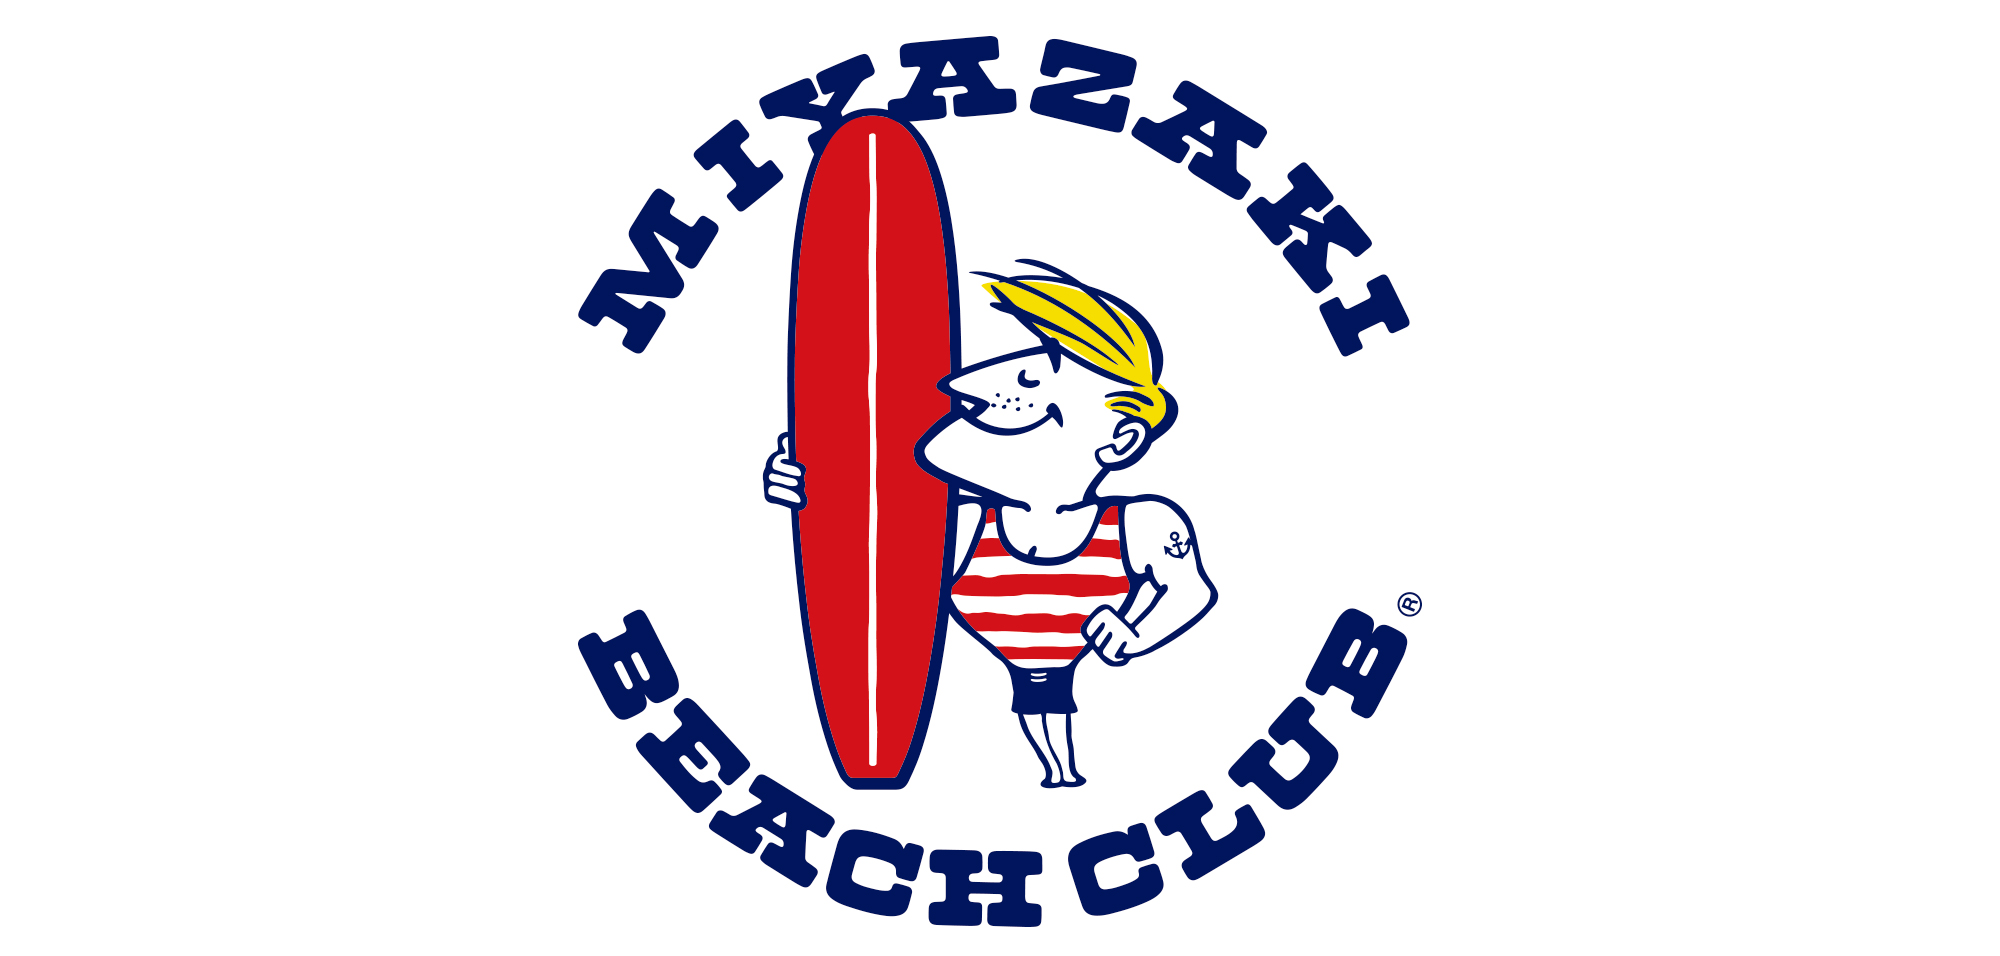 MIYAZAKI BEACH CLUB